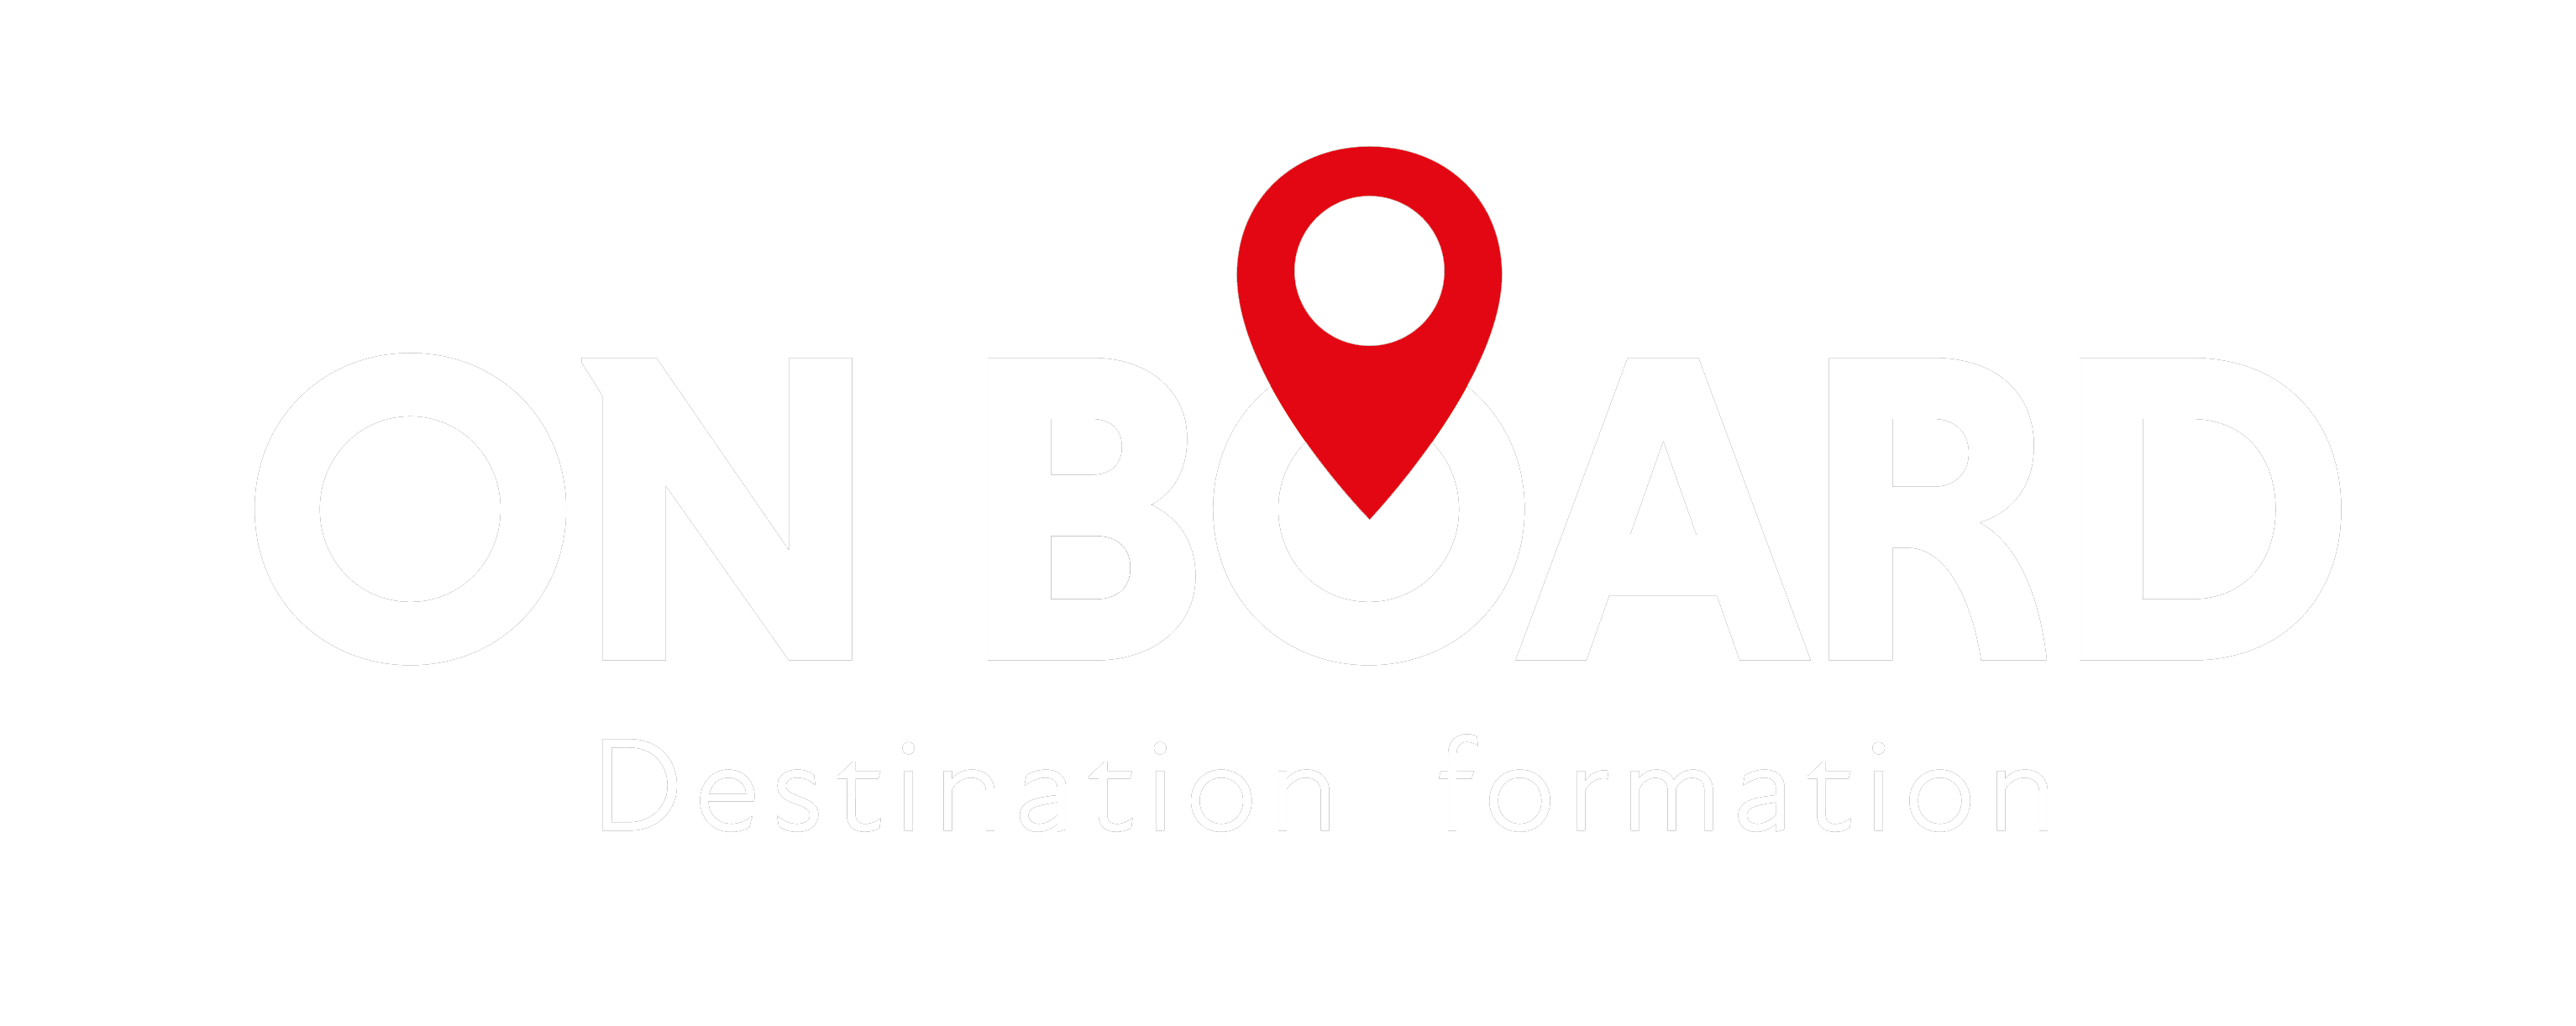 On Board, Destination formation